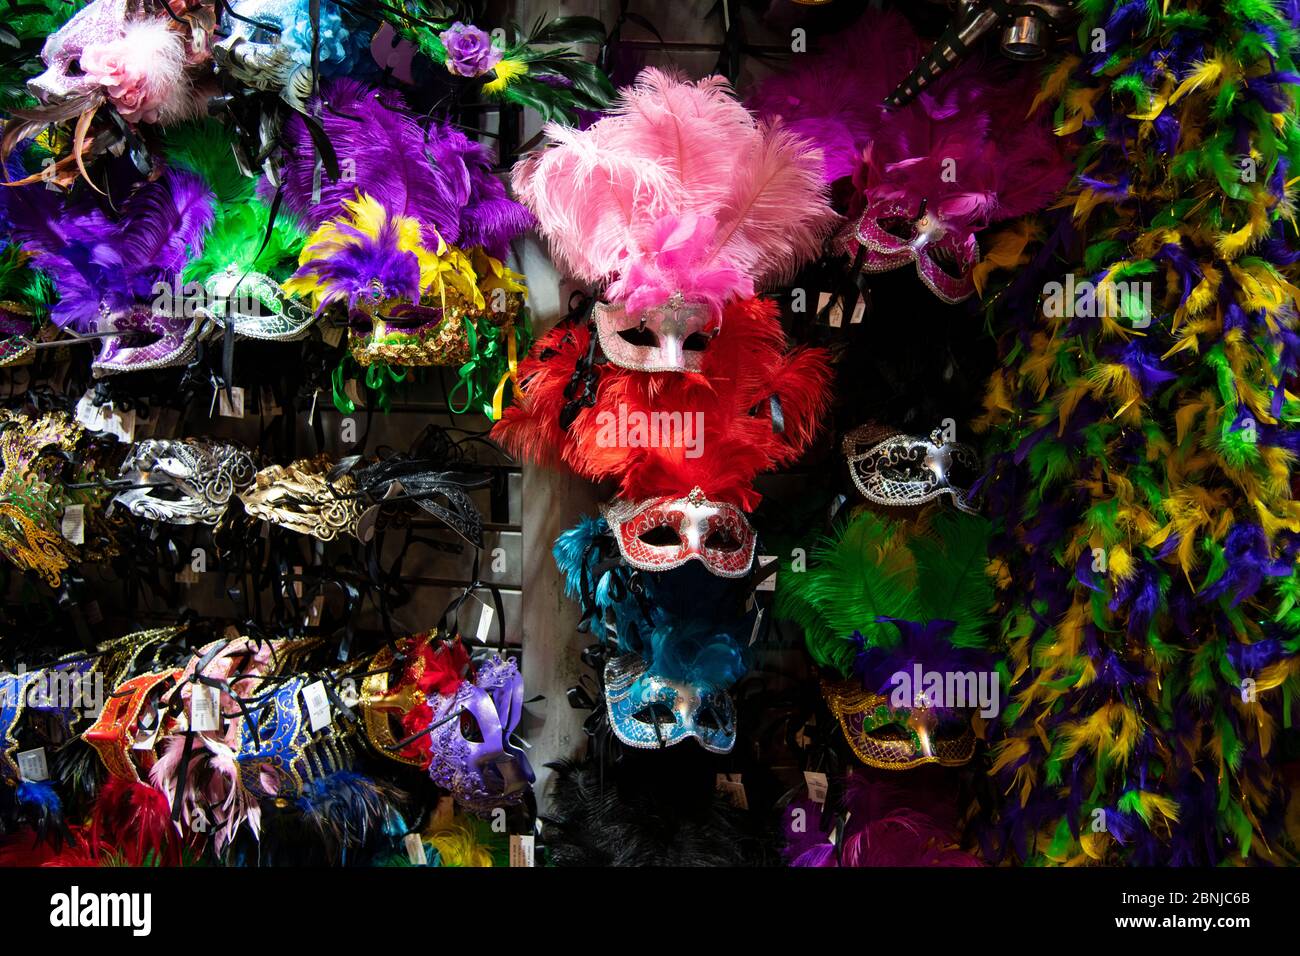 Maschere di Mardis Gras in vendita a New Orleans, Louisiana, Stati Uniti d'America, Nord America Foto Stock